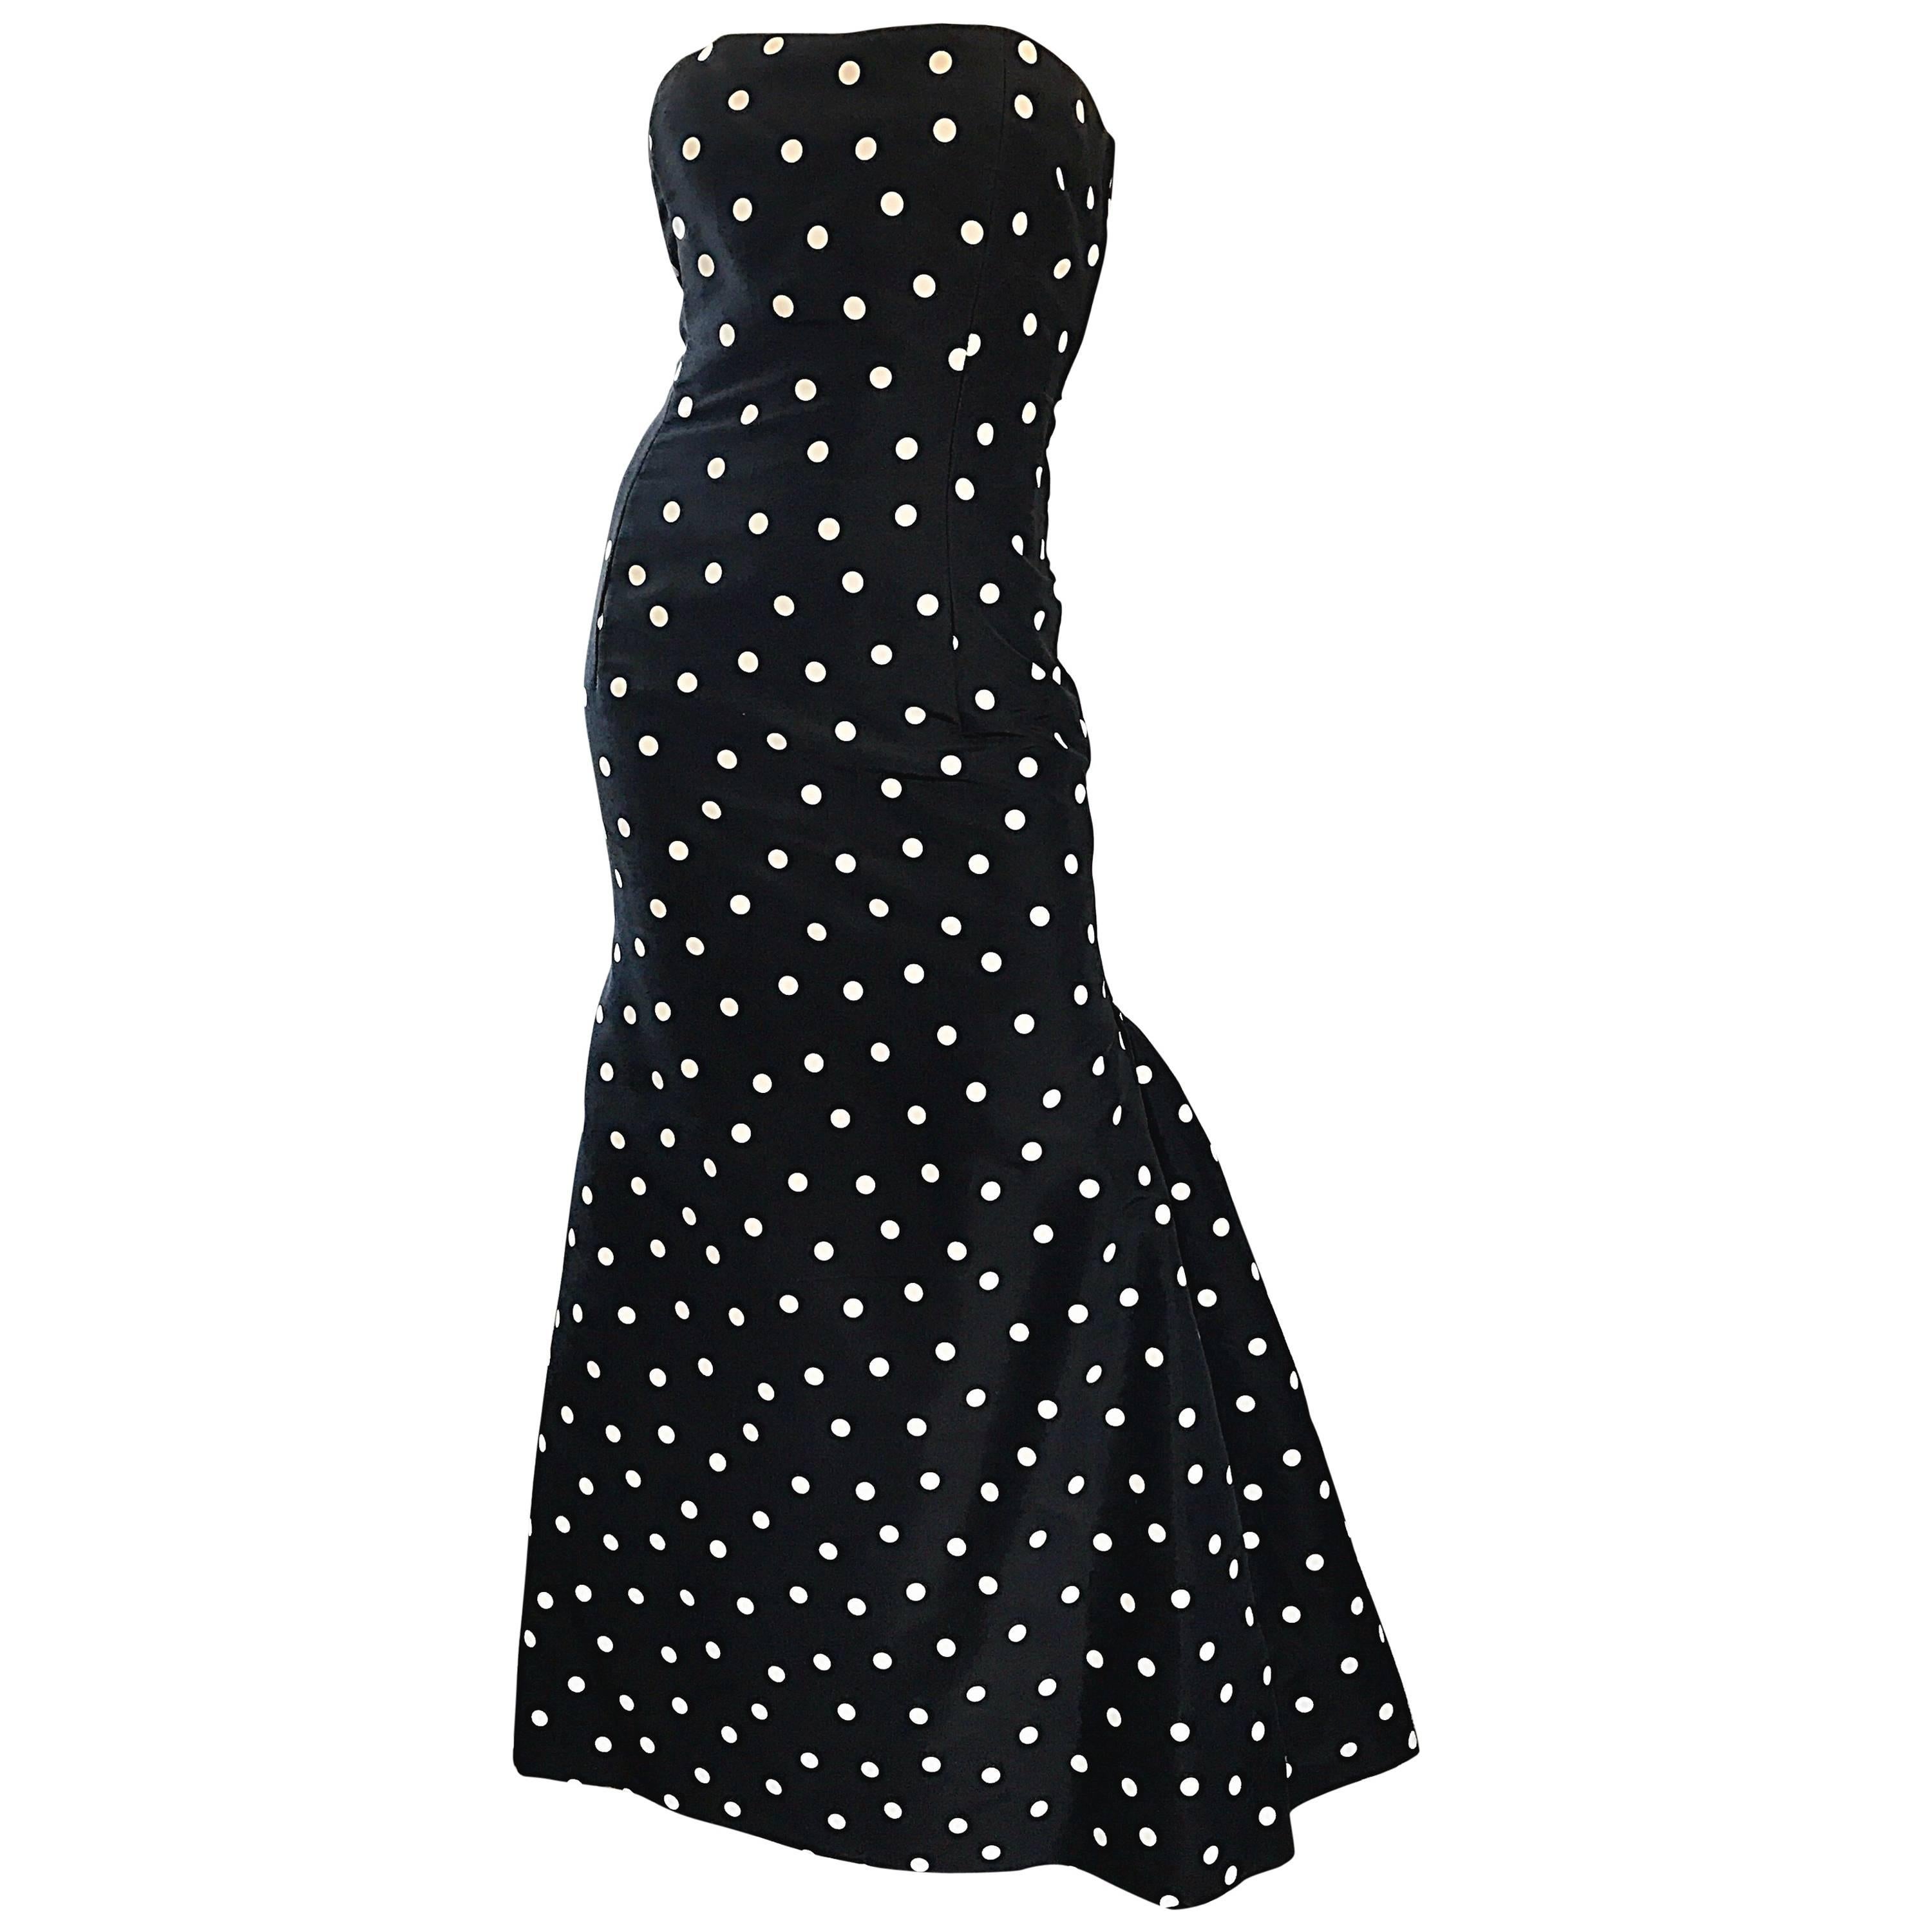 Vintage Oscar de la Renta Black and White Polka Dot Strapless Mermaid Gown Dress